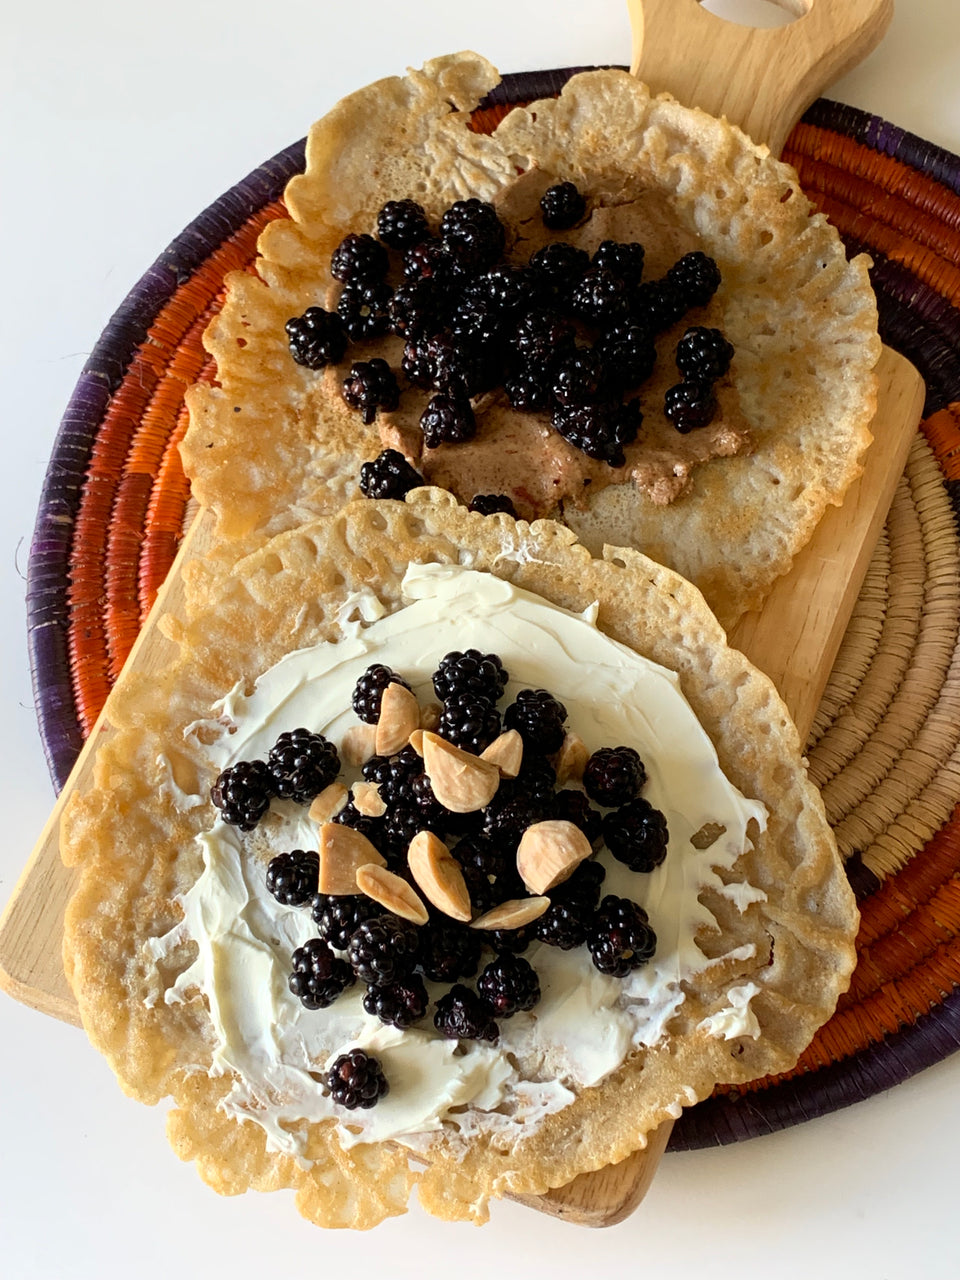 Gluten-free and vegan spongy thin Kisra with Greek yogurt or almond butter and raspberries